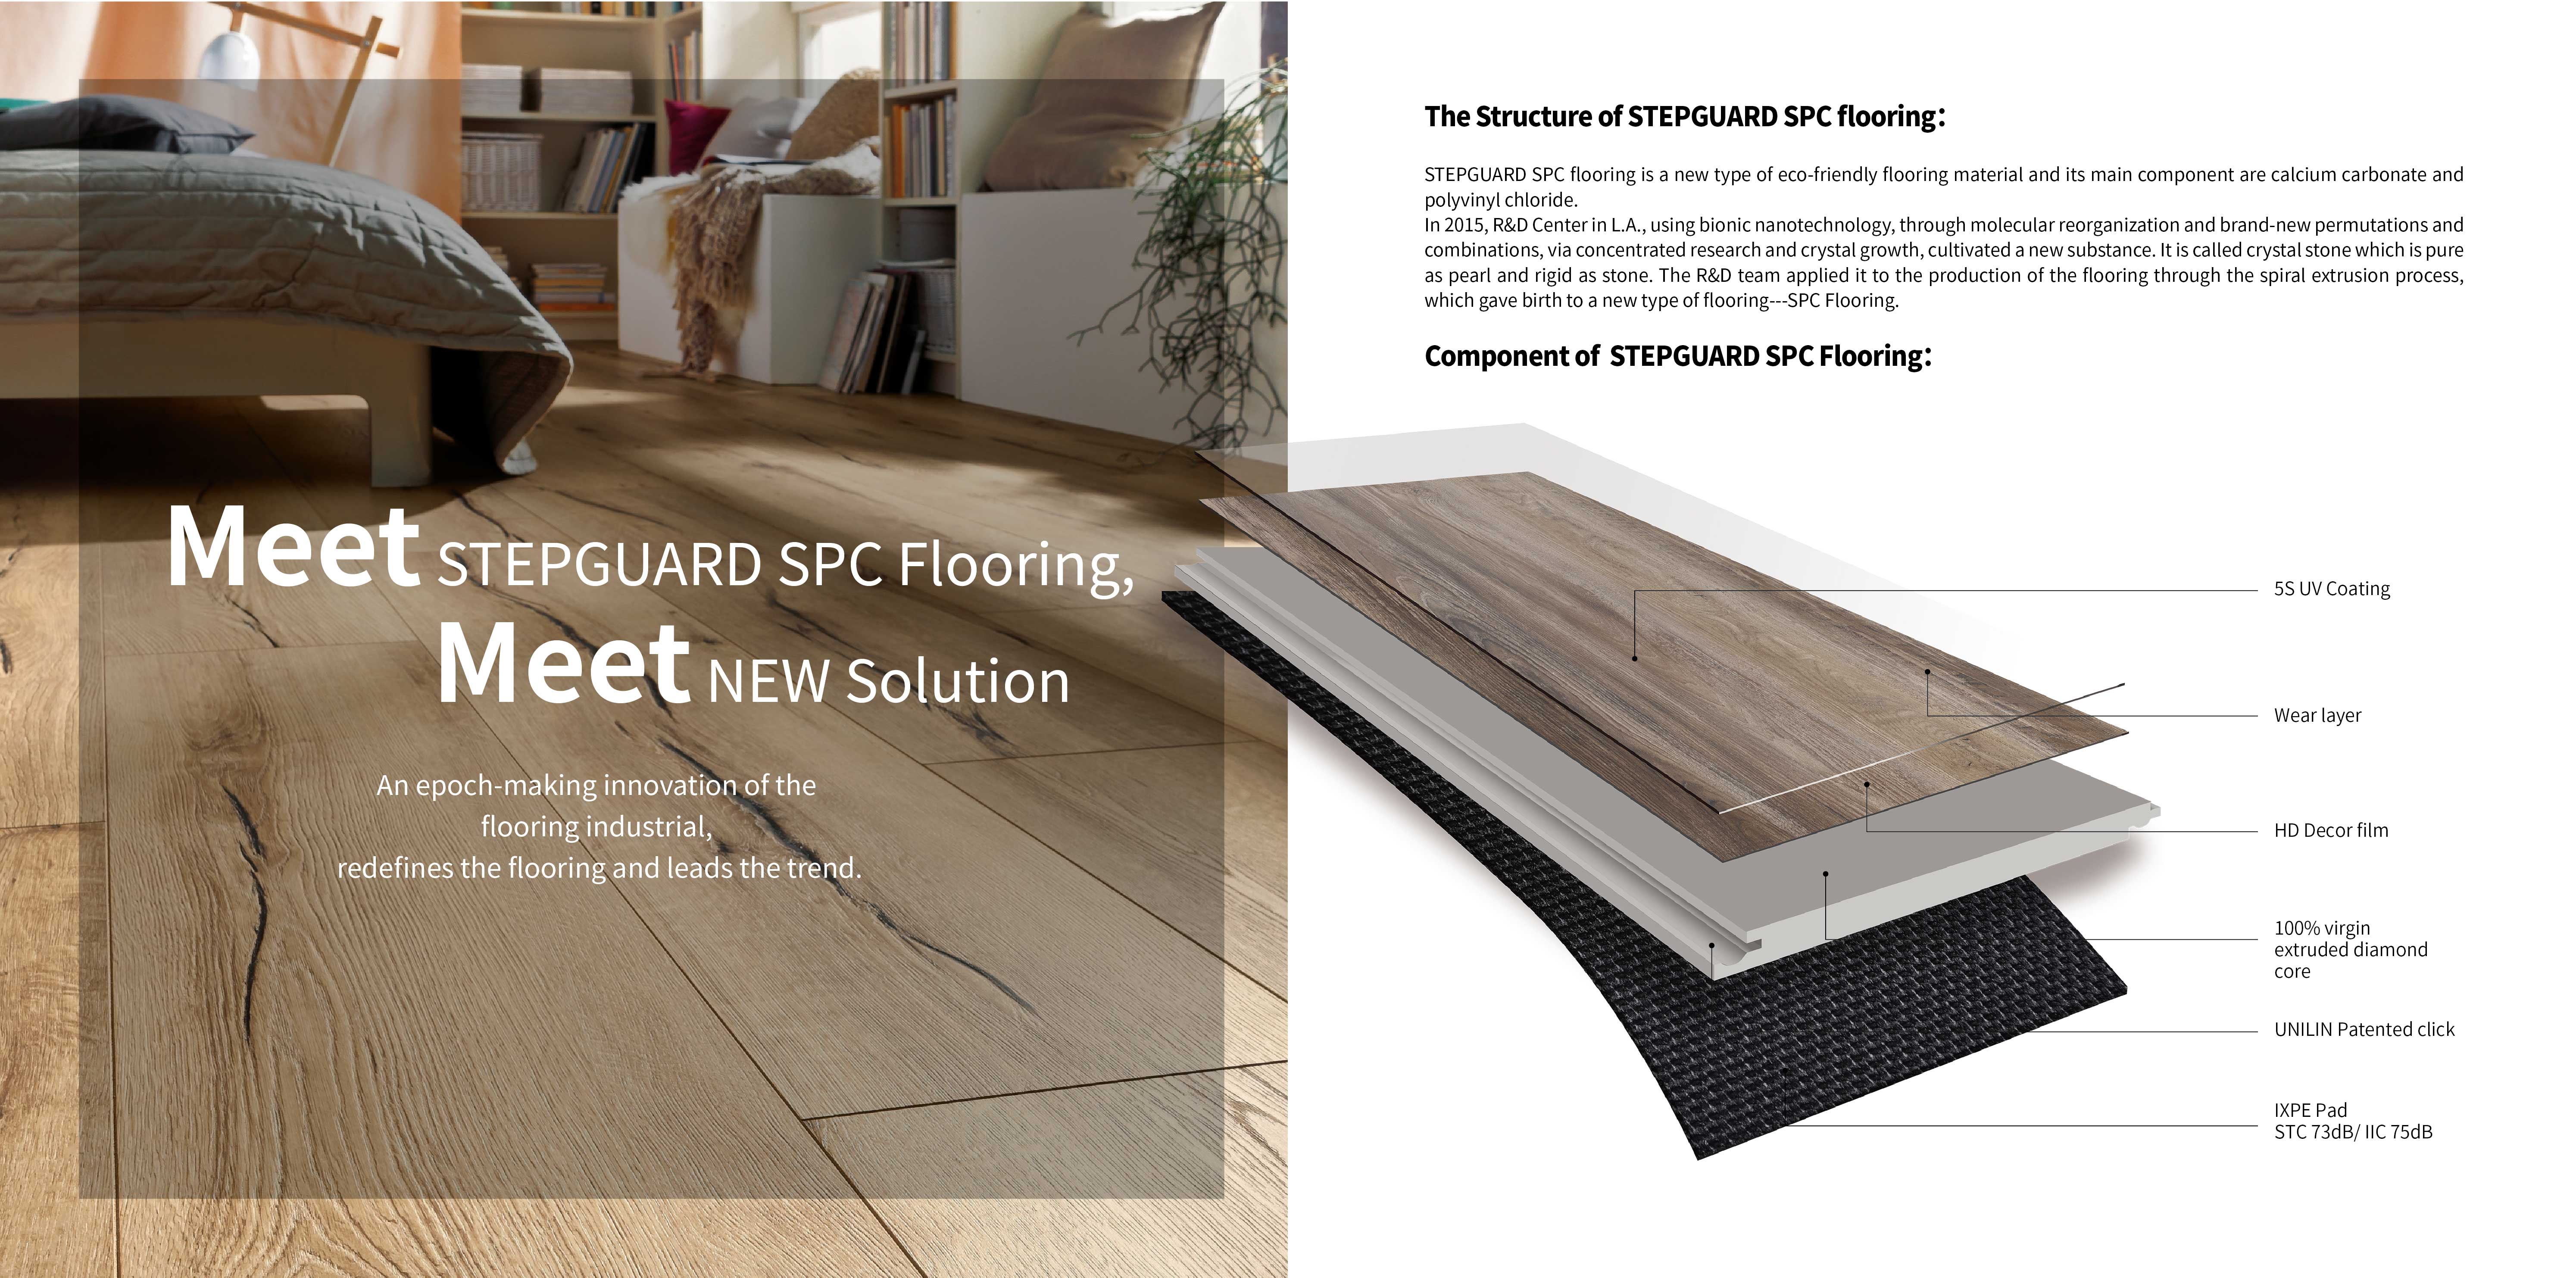 Spc Flooring Vs Engineered Hardwood, Engineered Hardwood Flooring With 4mm Wear Layer